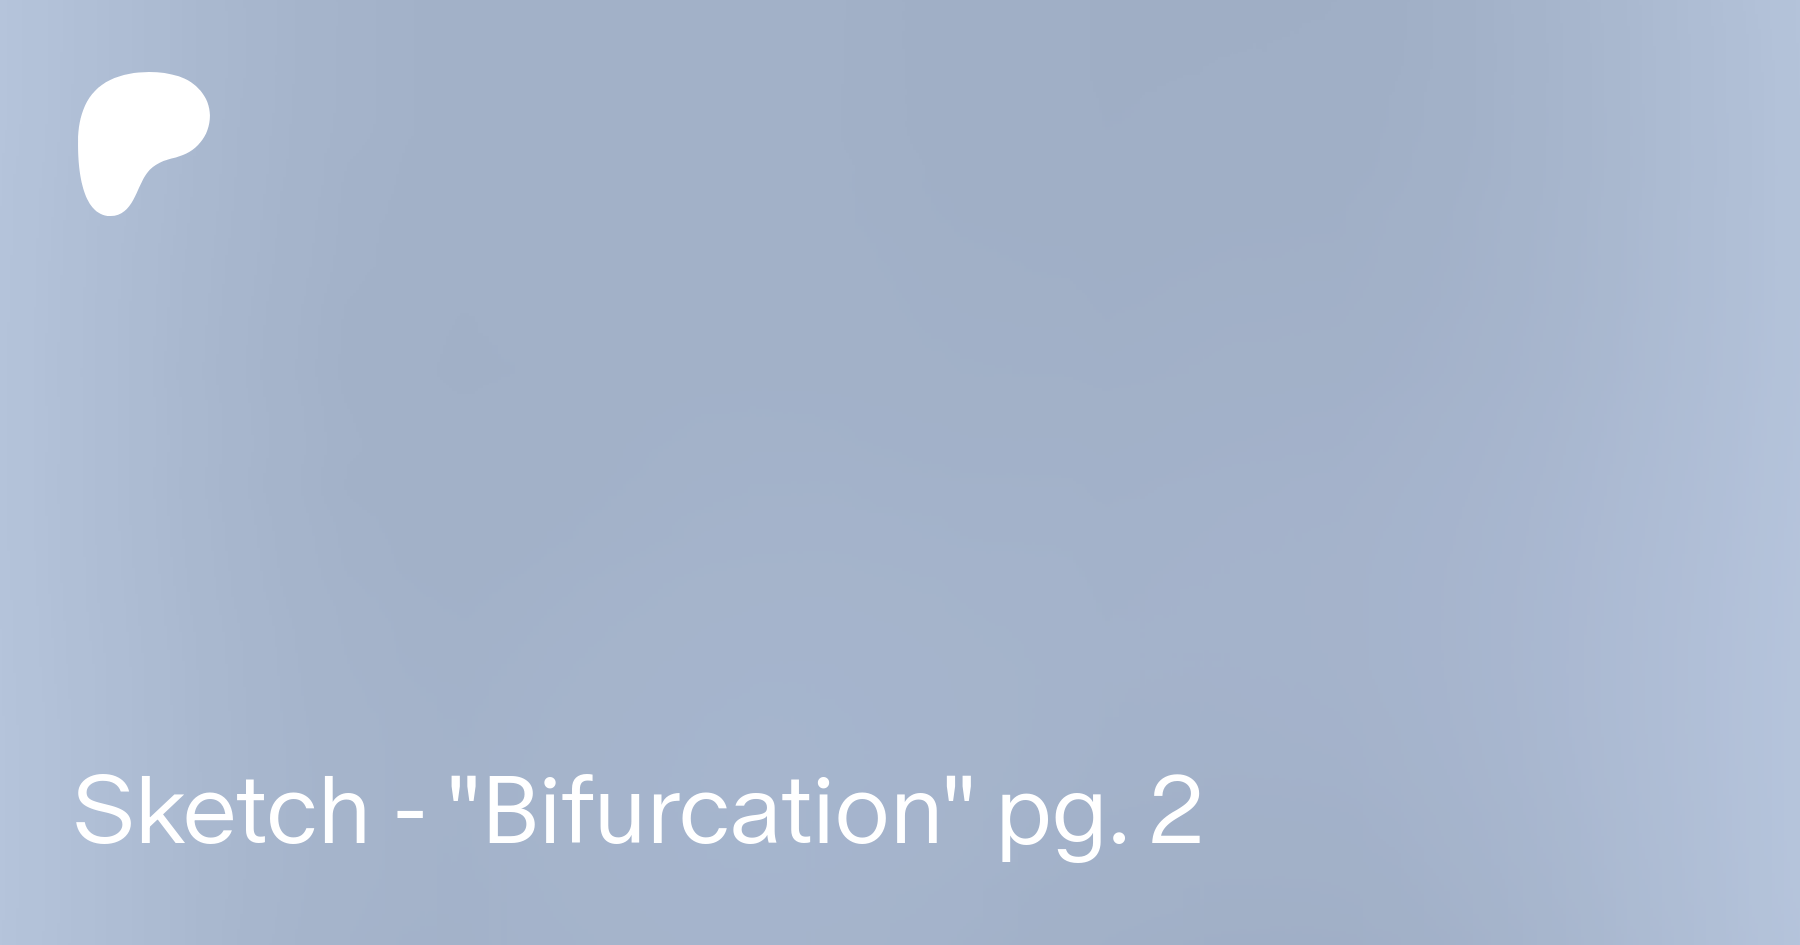 Bifurcation sigma x